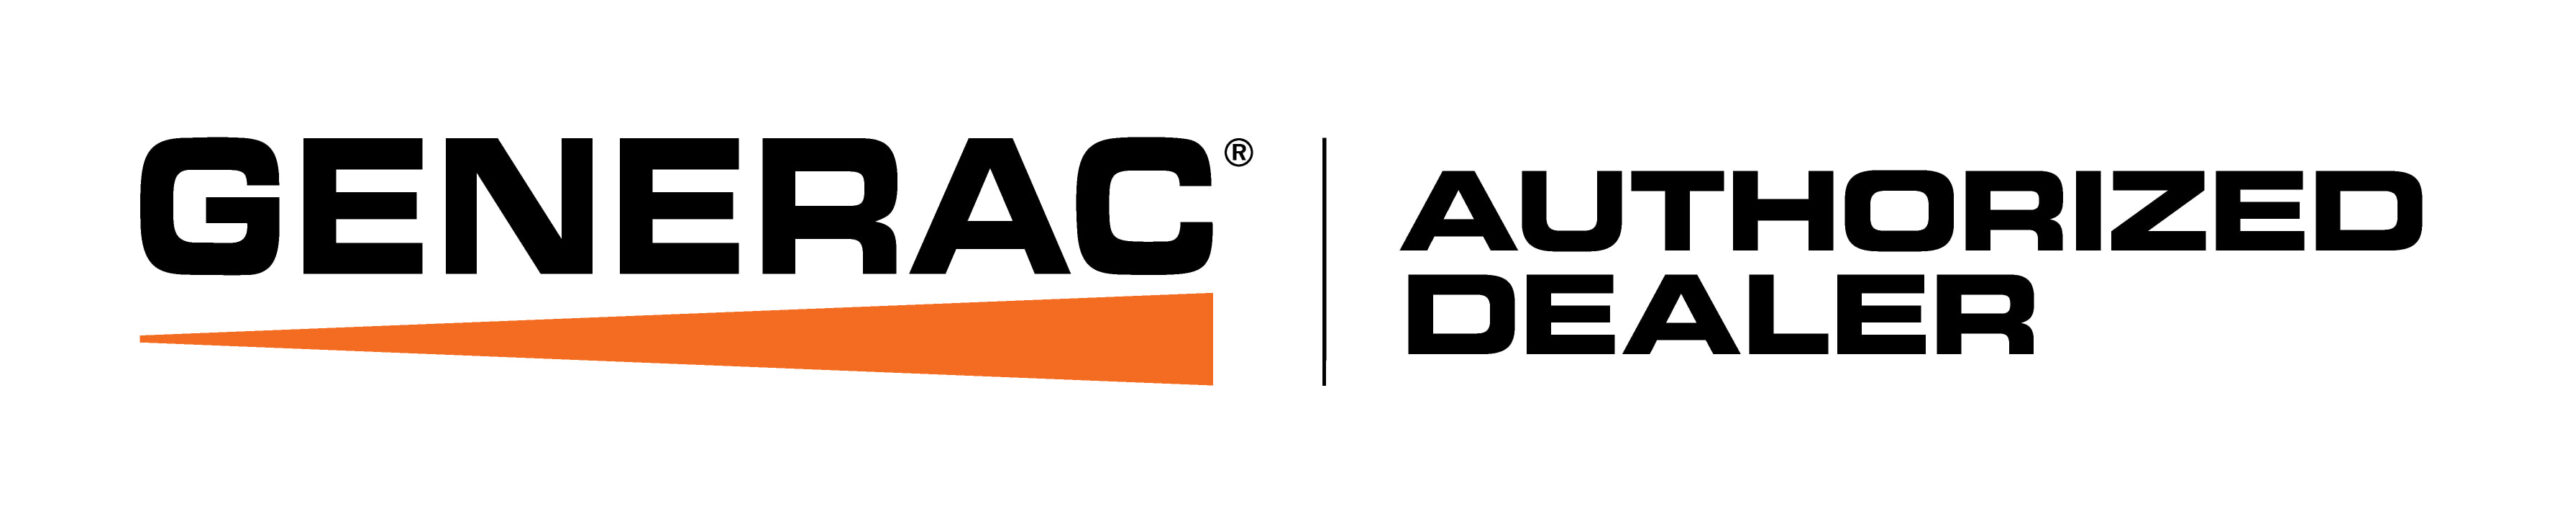 Authorized Generac Dealer Logo - Air Comfort Solutions OKC